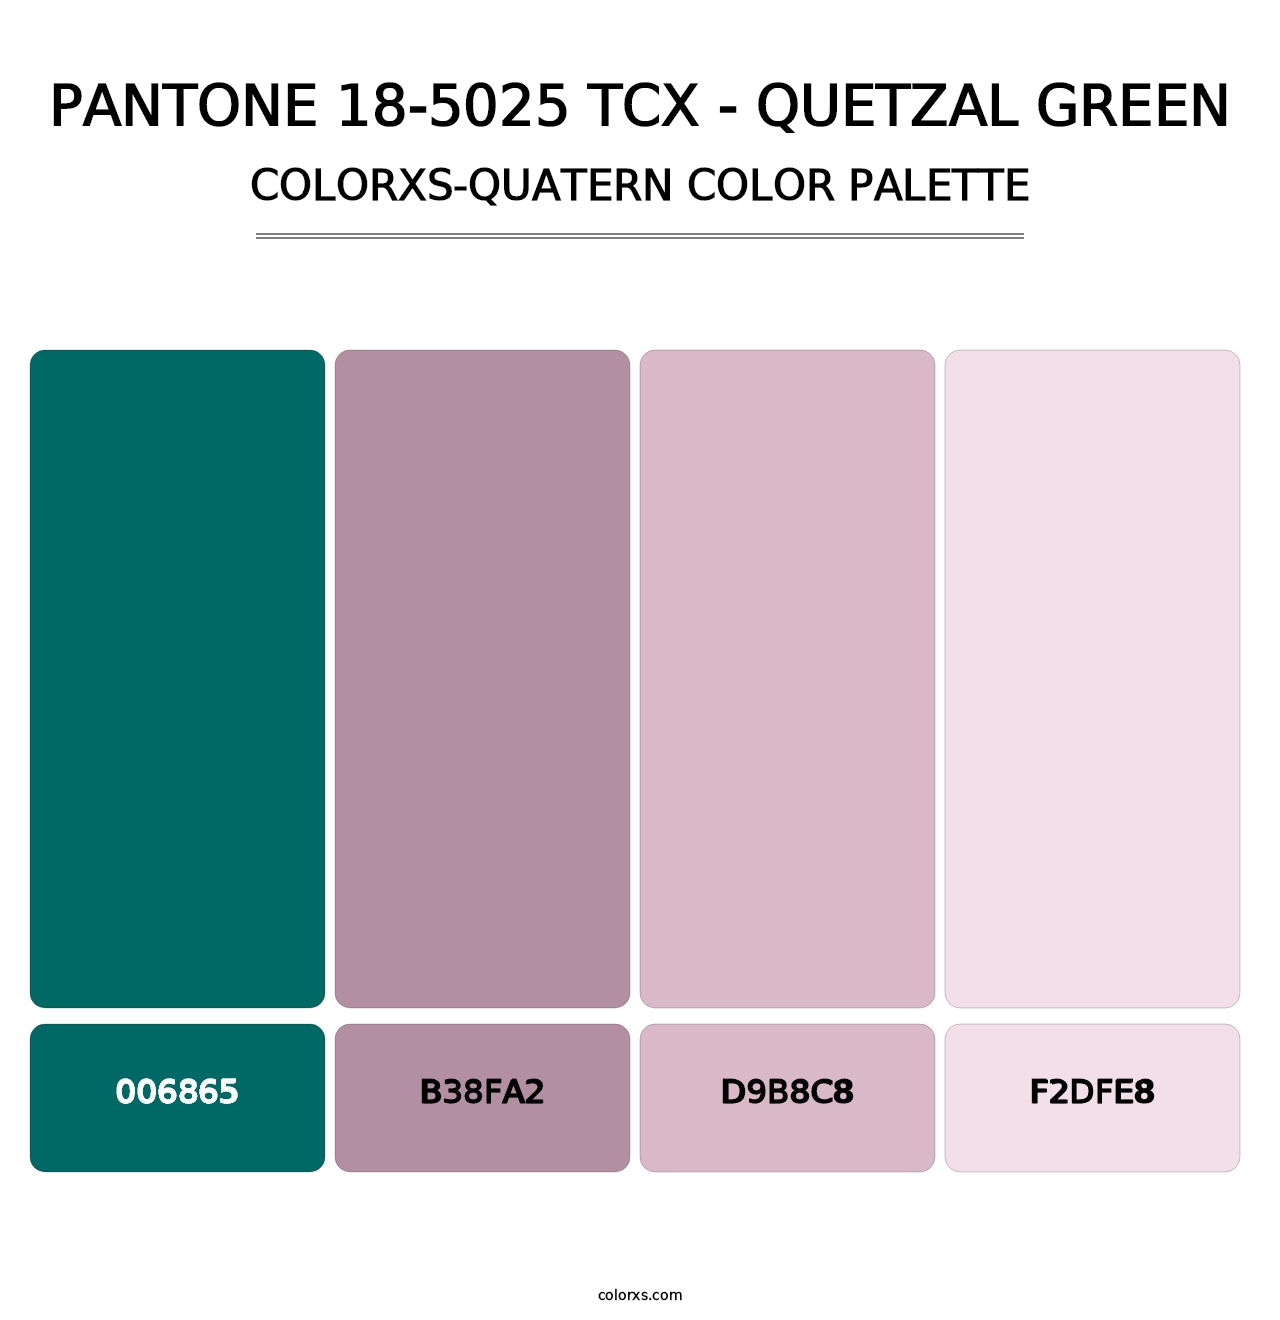 PANTONE 18-5025 TCX - Quetzal Green - Colorxs Quatern Palette